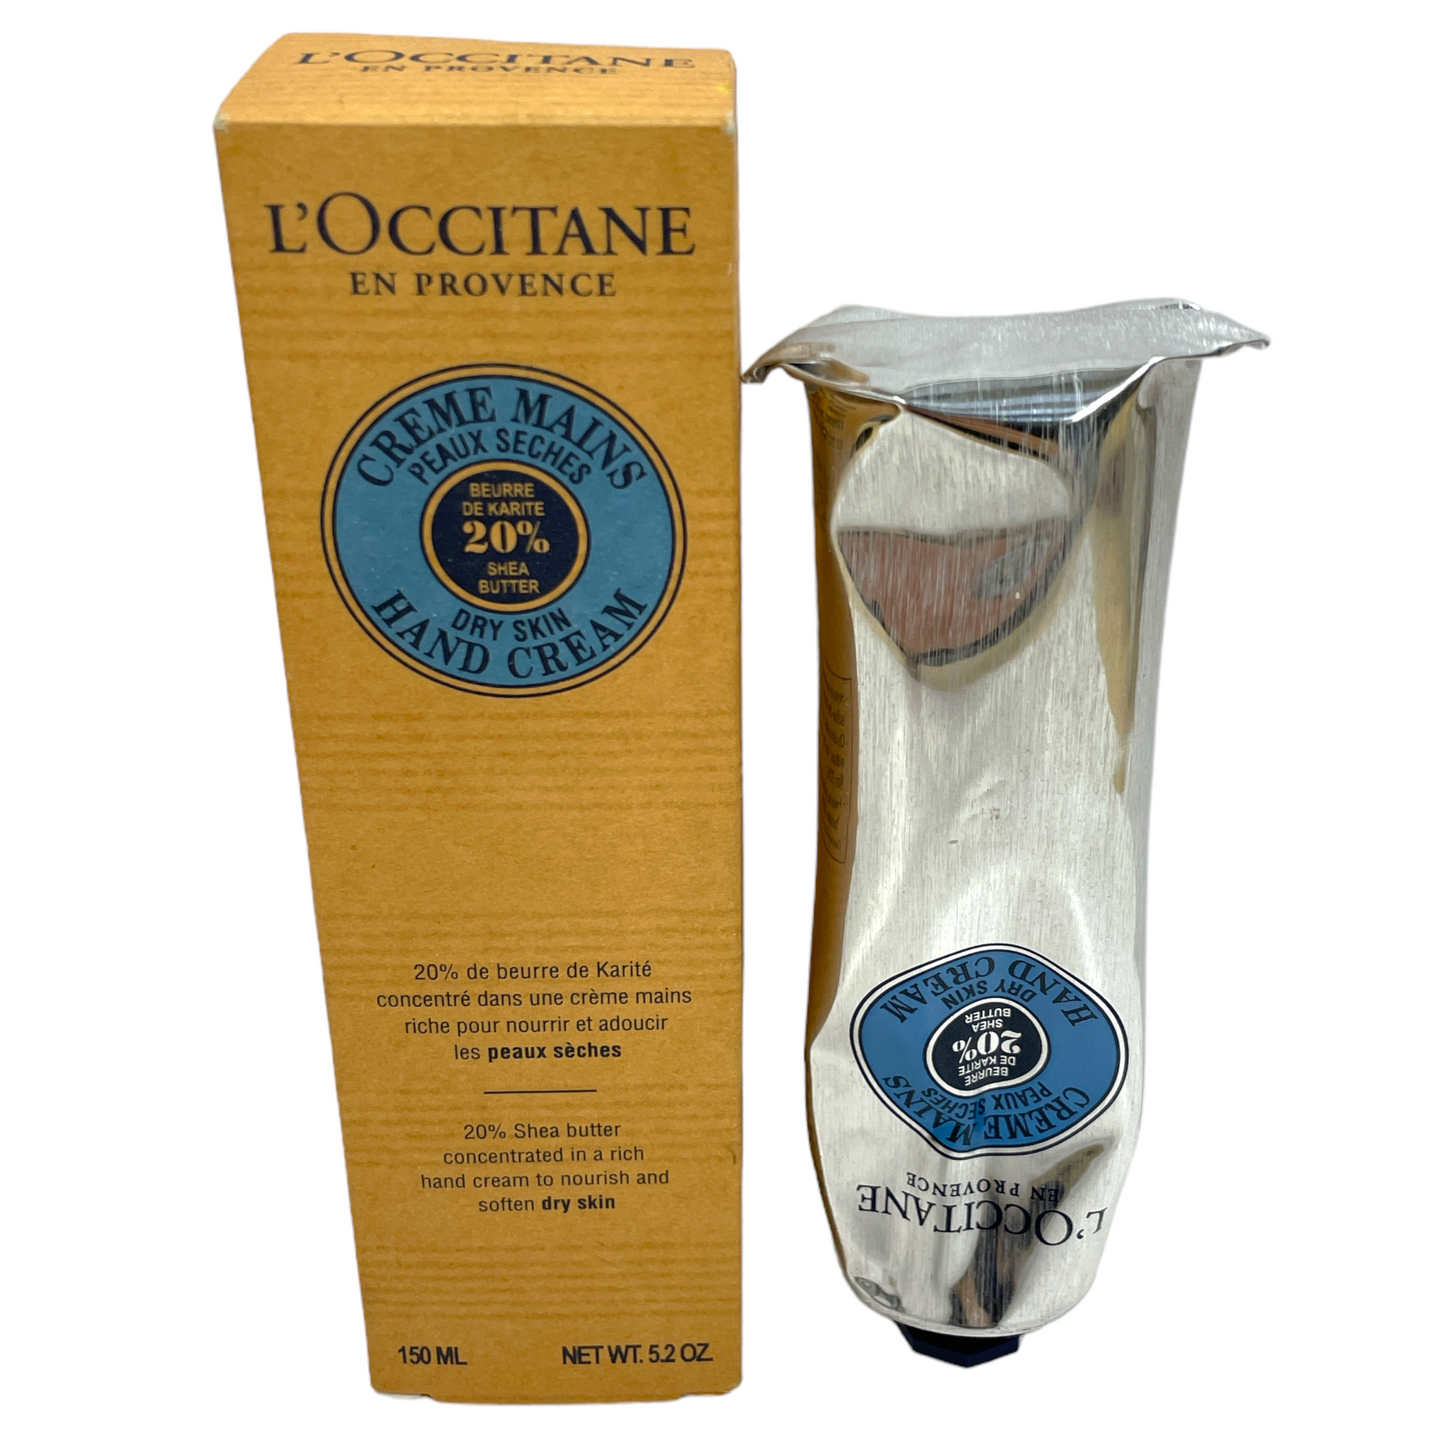 L'Occitane Dry Skin Hand Cream 20% Shea Butter (150ml / 5.2oz)